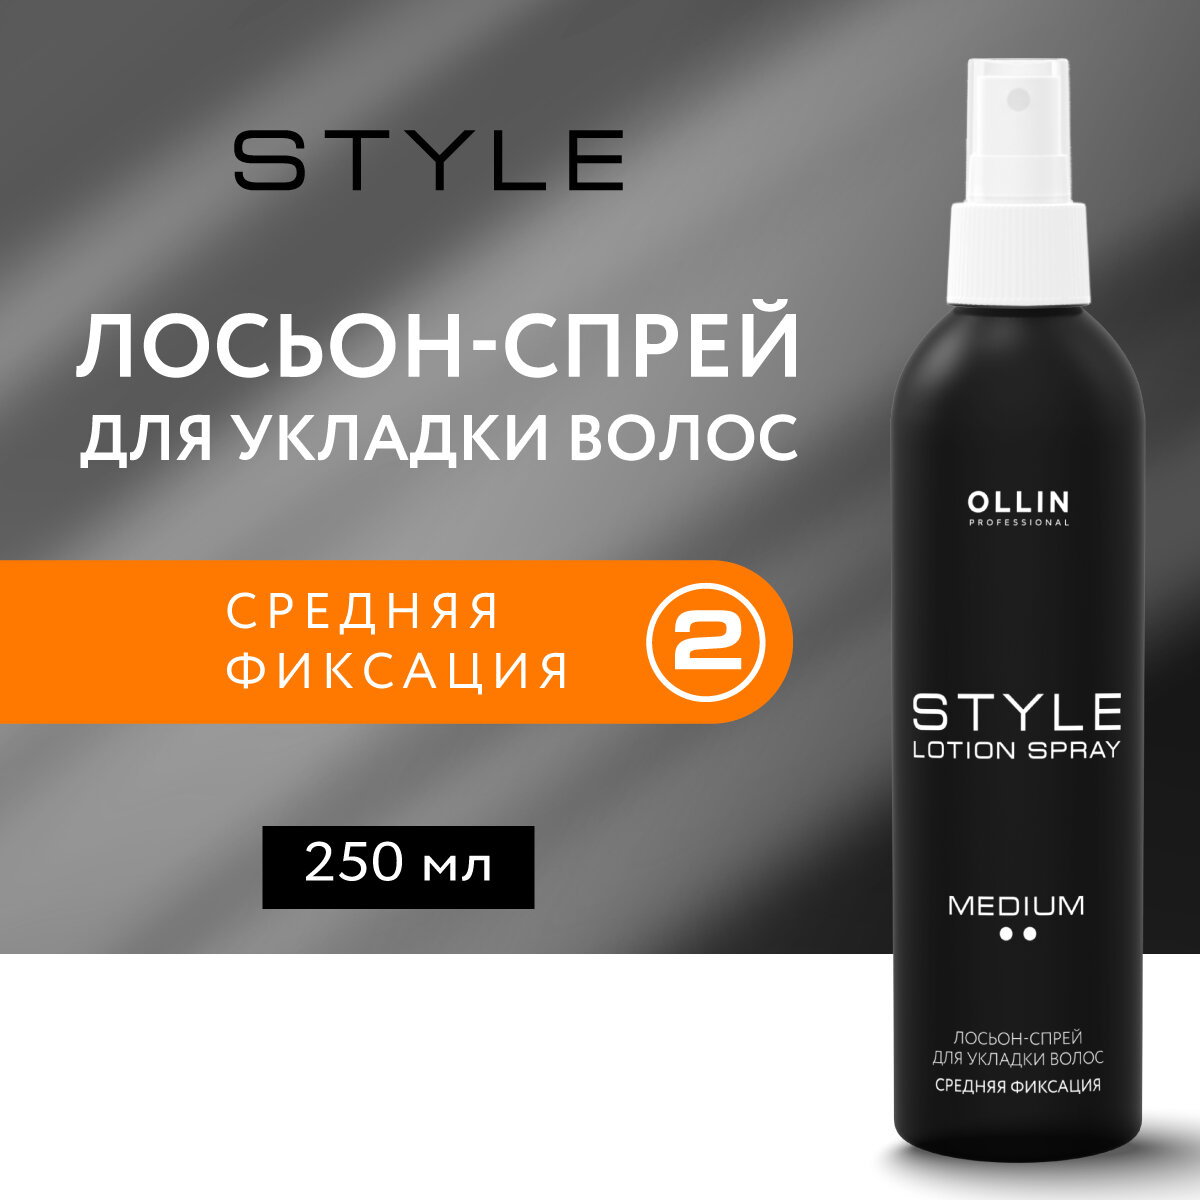 Ollin Professional Lotion-Spray Medium Лосьон-спрей для укладки волос средней фиксации 250 мл (Ollin Professional, ) - фото №6